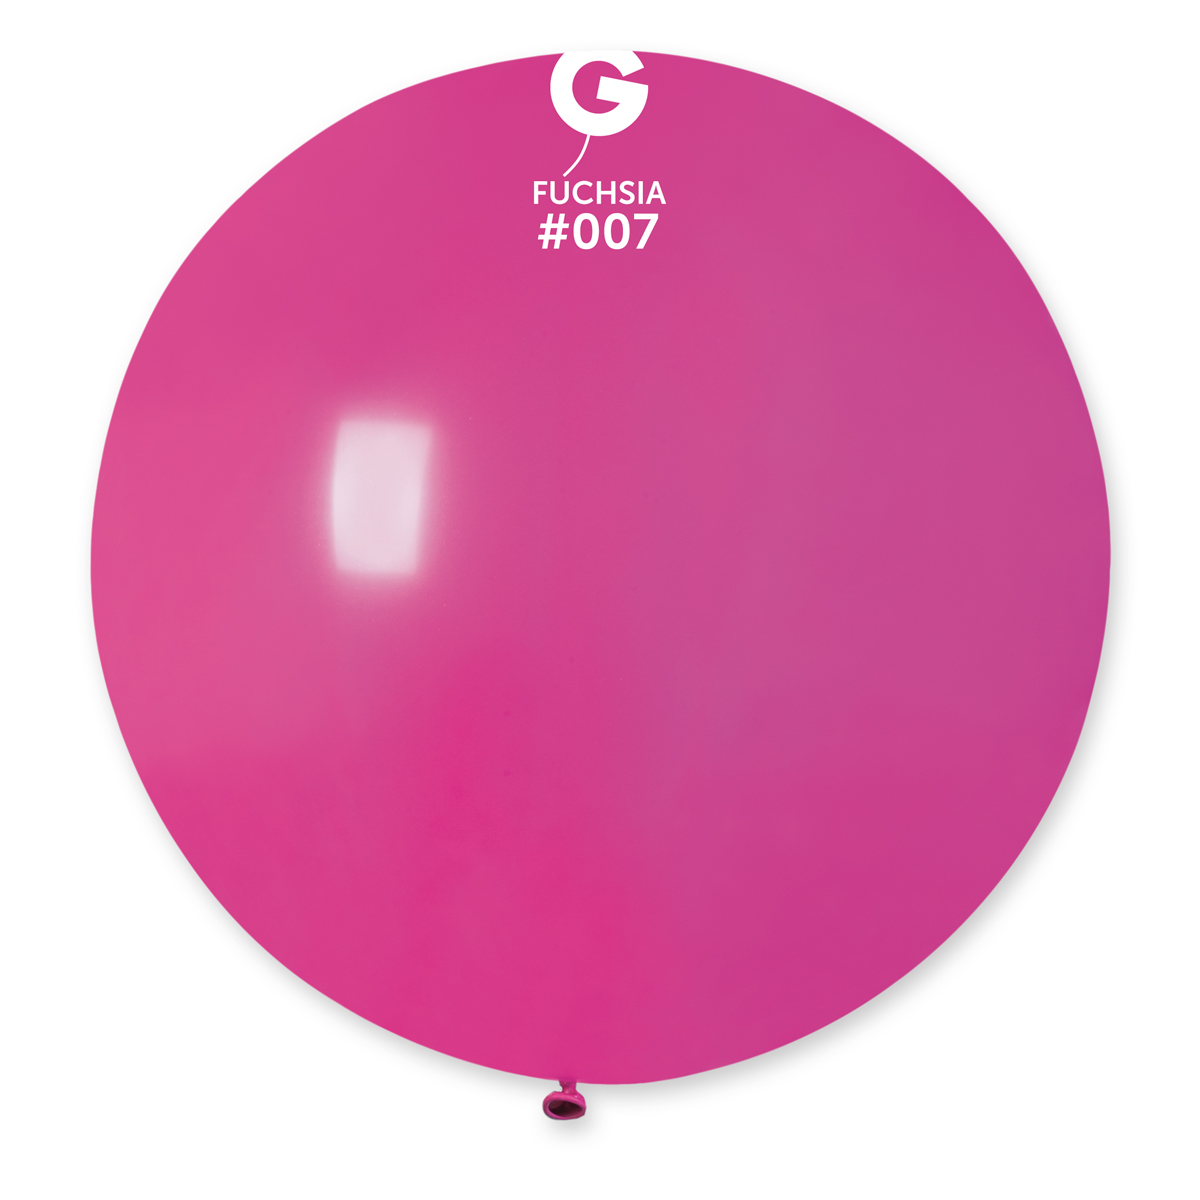 Gemar Kulatý pastelový balonek 80 cm fuchsiový 25 ks